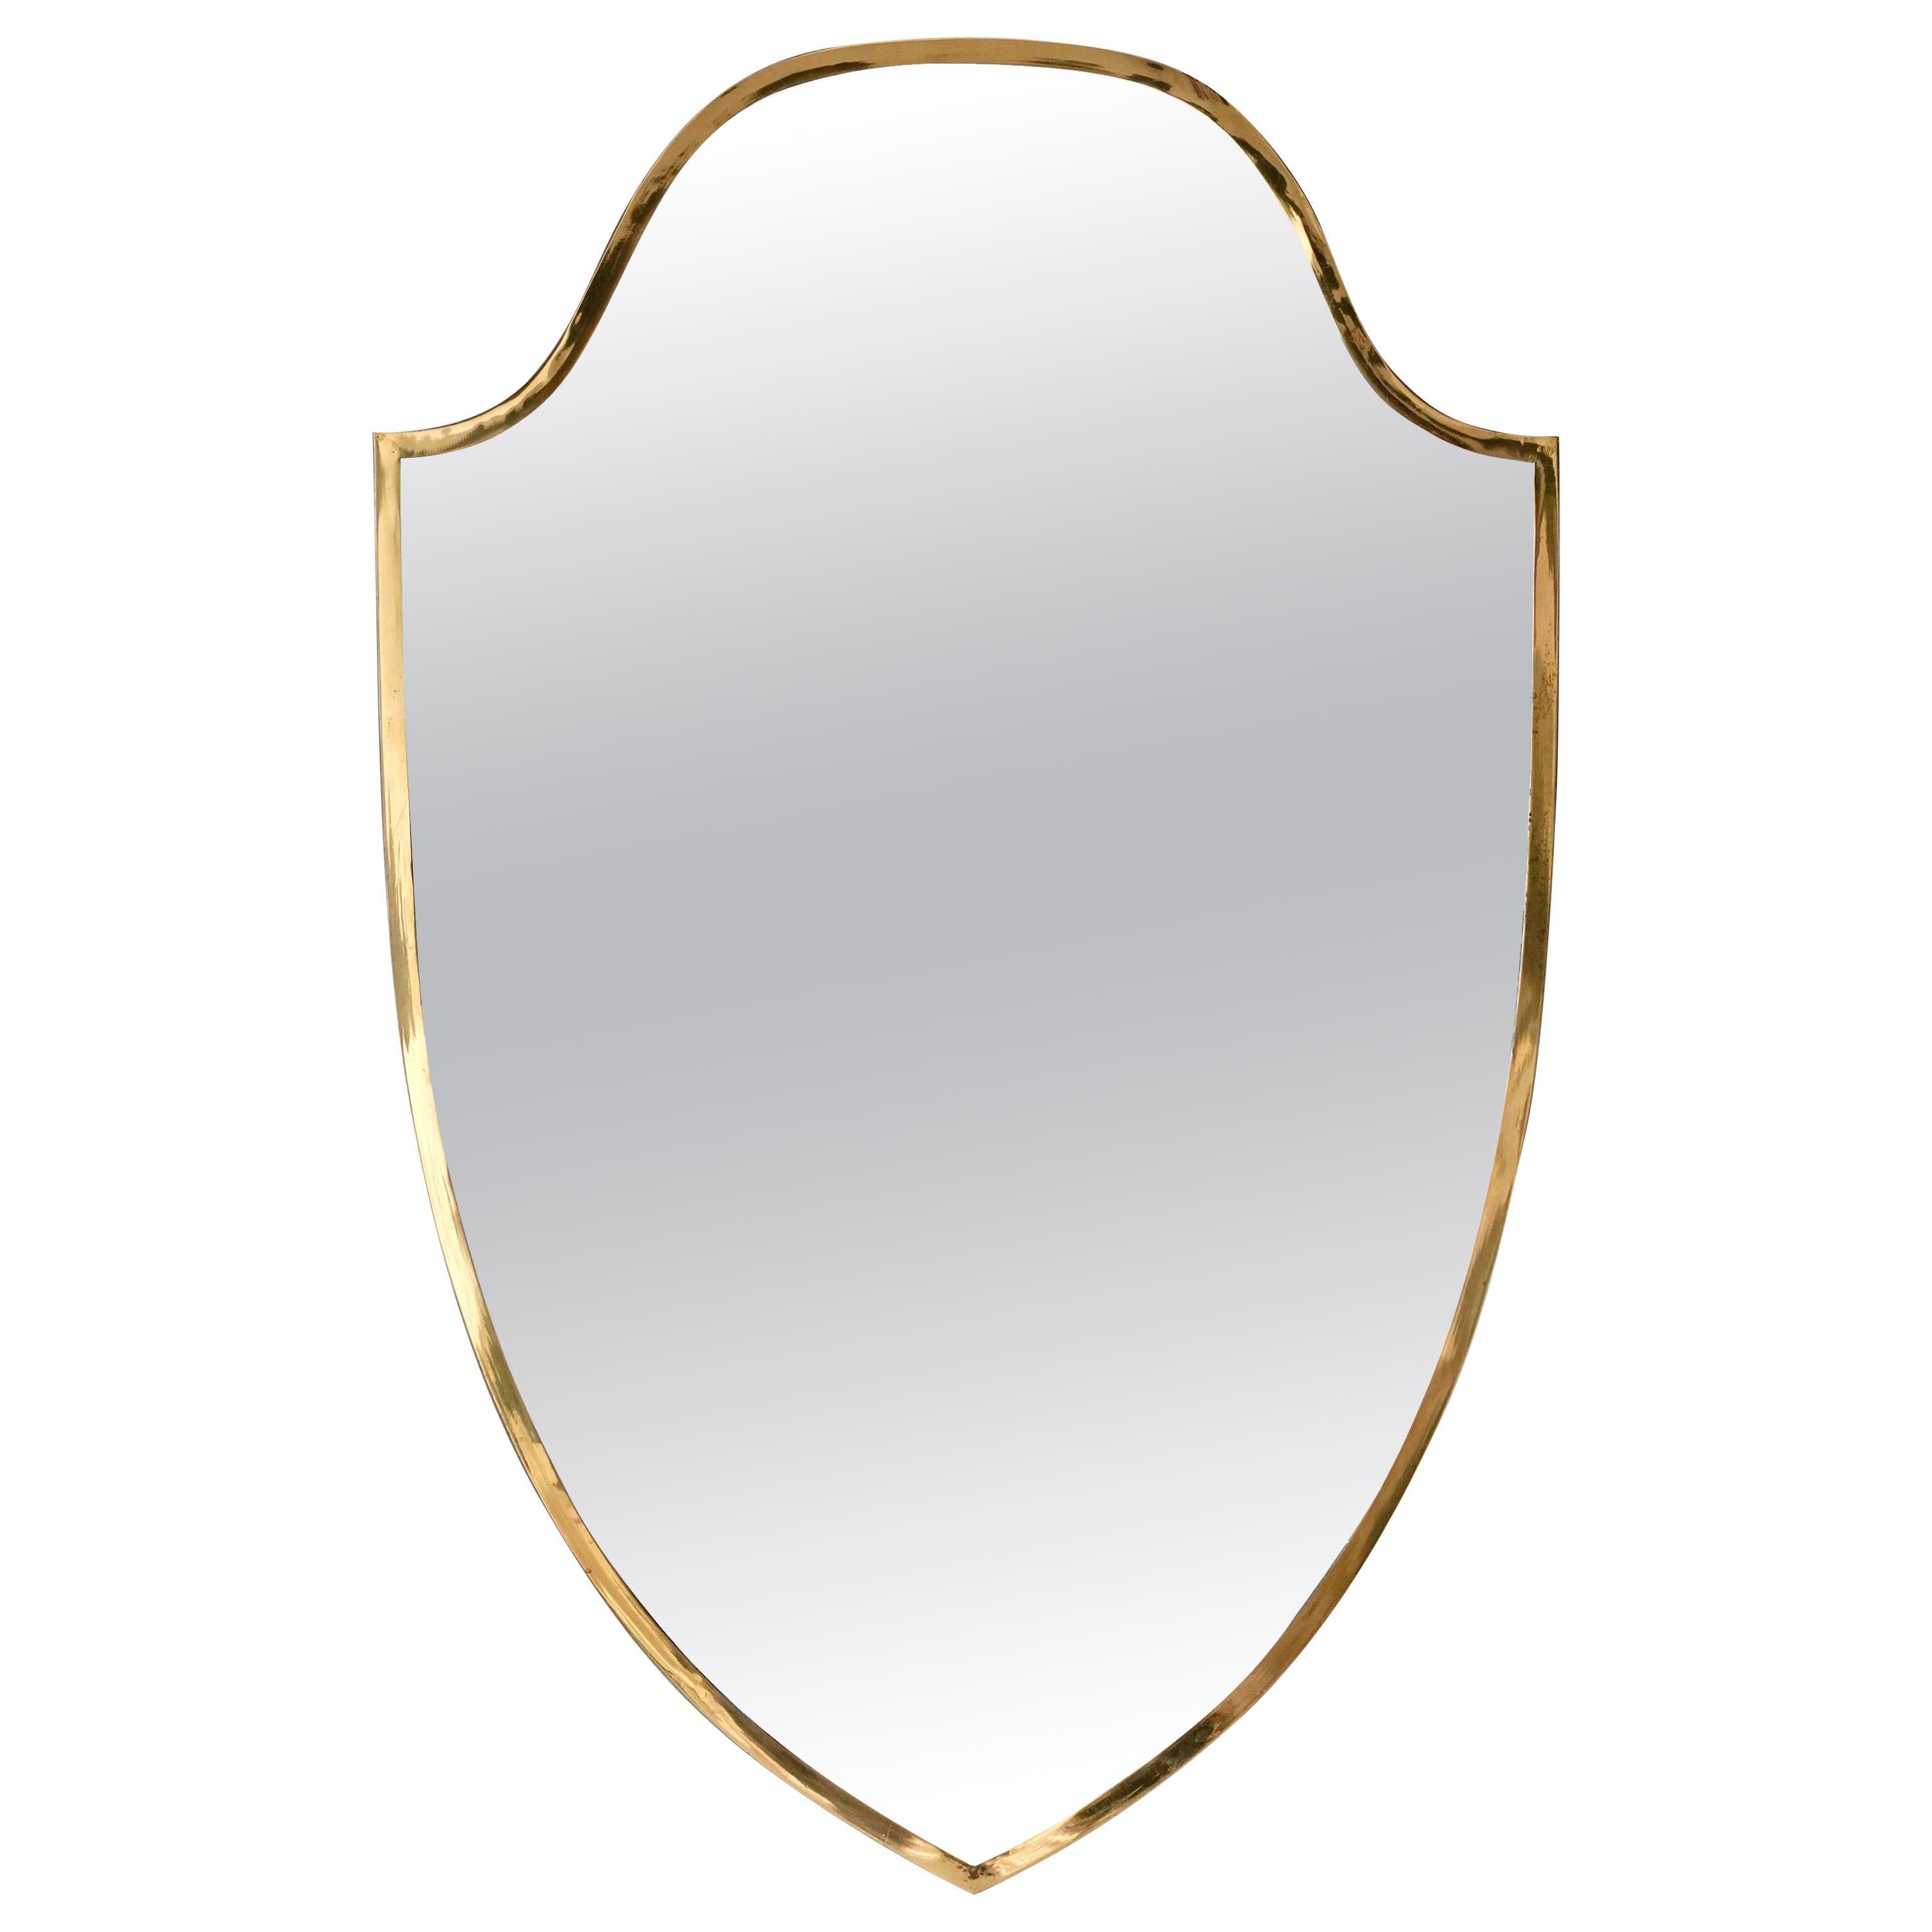 Italian Designer, Sizable Modernist Mirror, Brass, Mirror Glass, Italy, 1960s